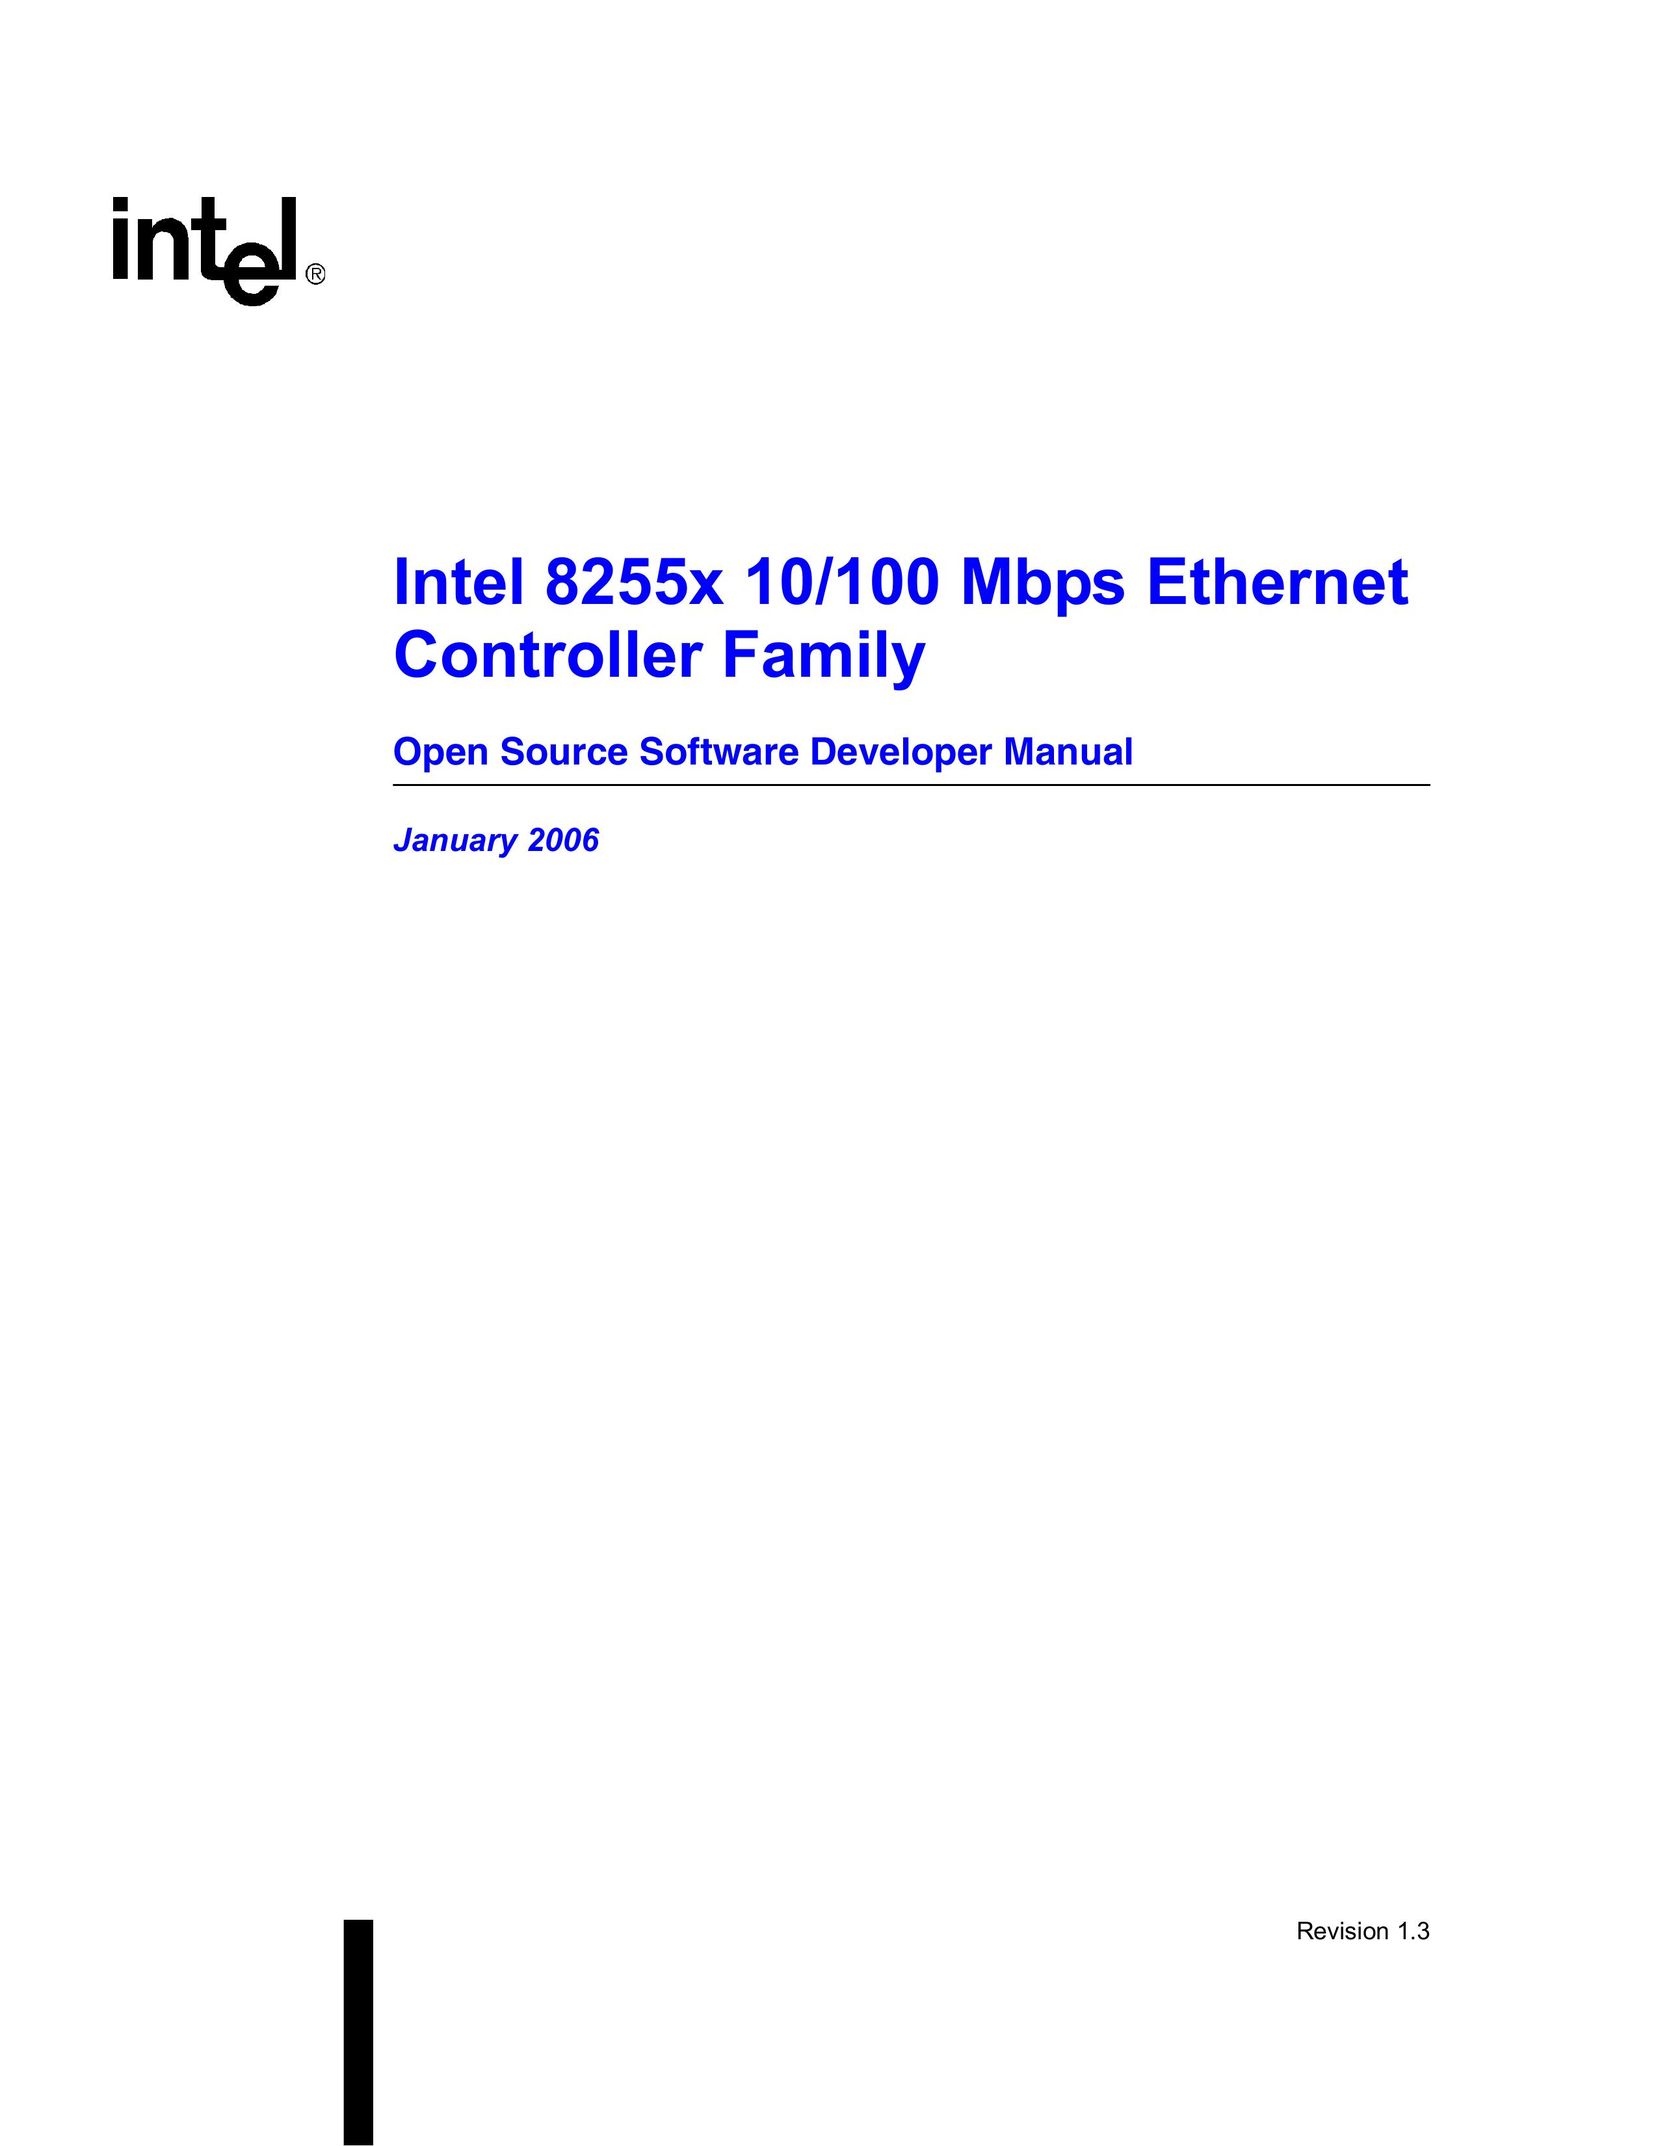 Intel 82558 Switch User Manual